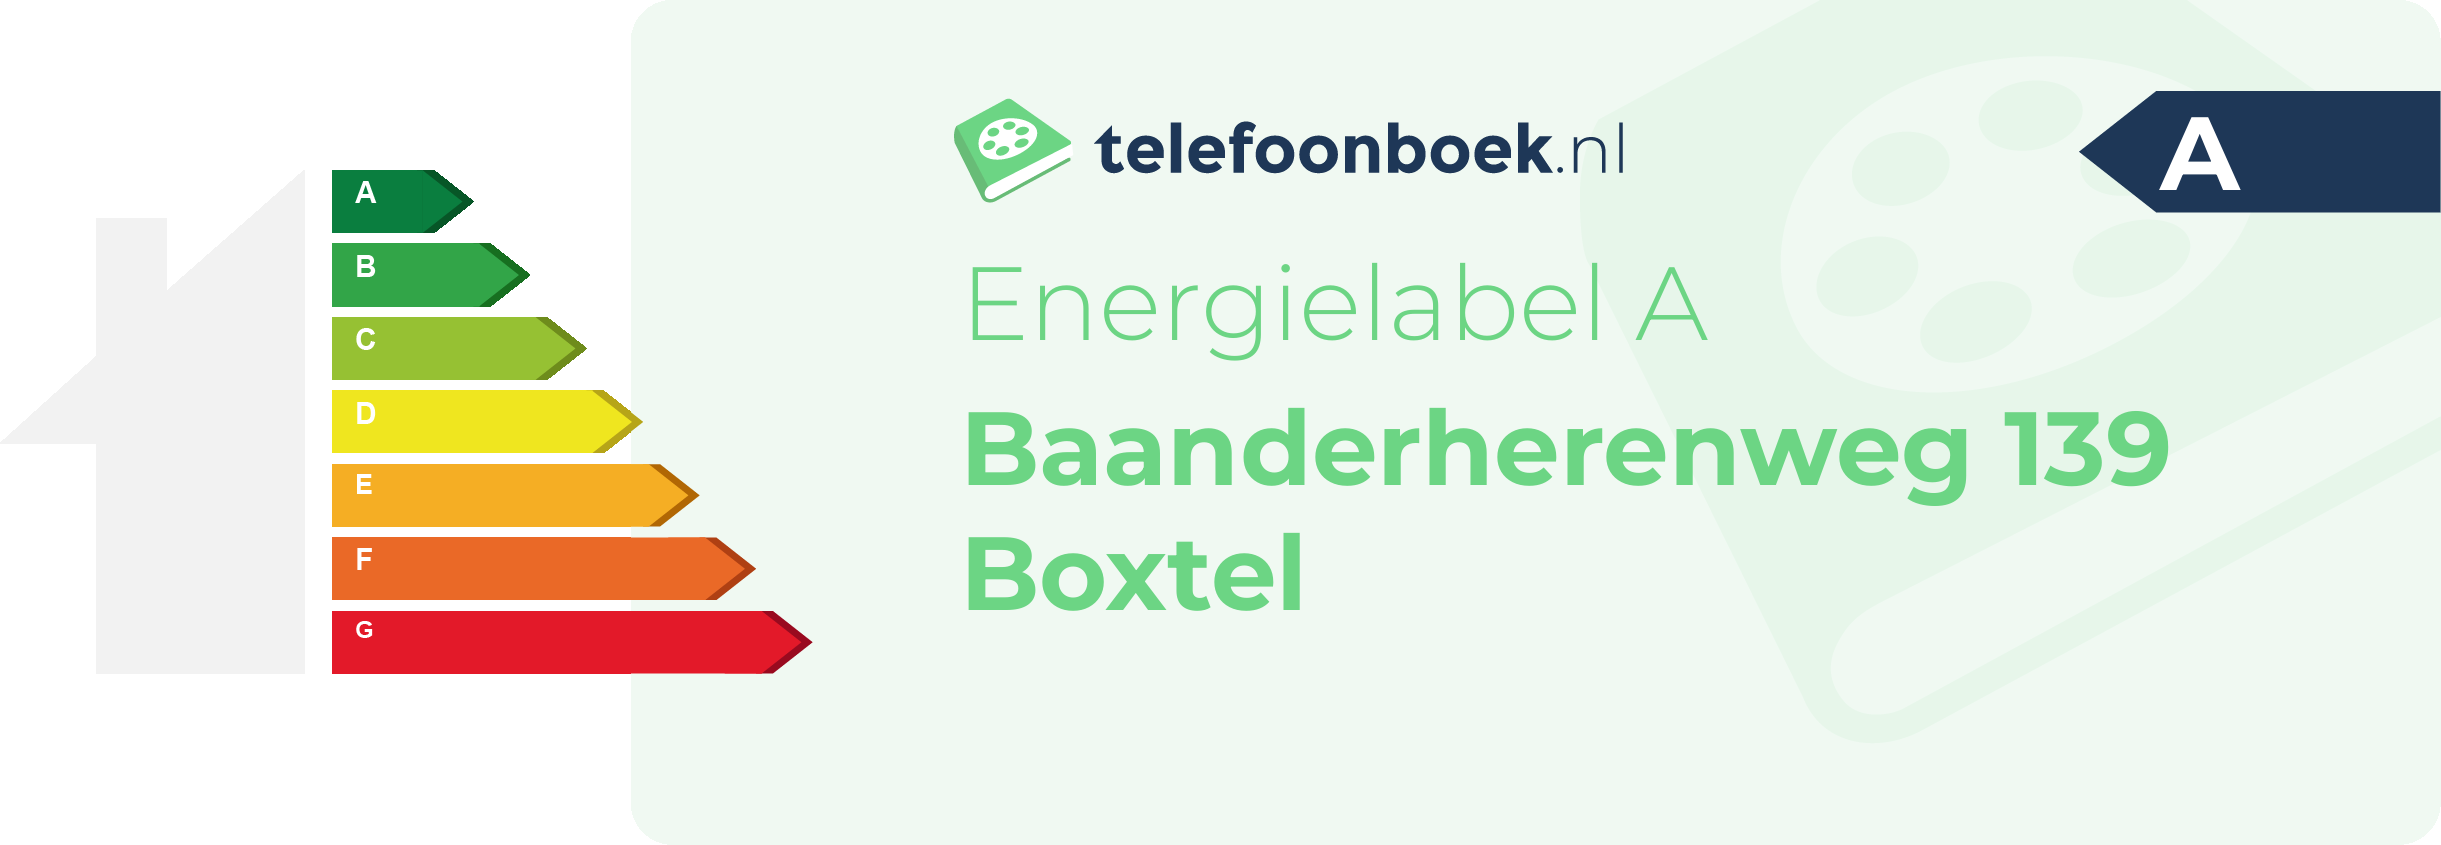 Energielabel Baanderherenweg 139 Boxtel